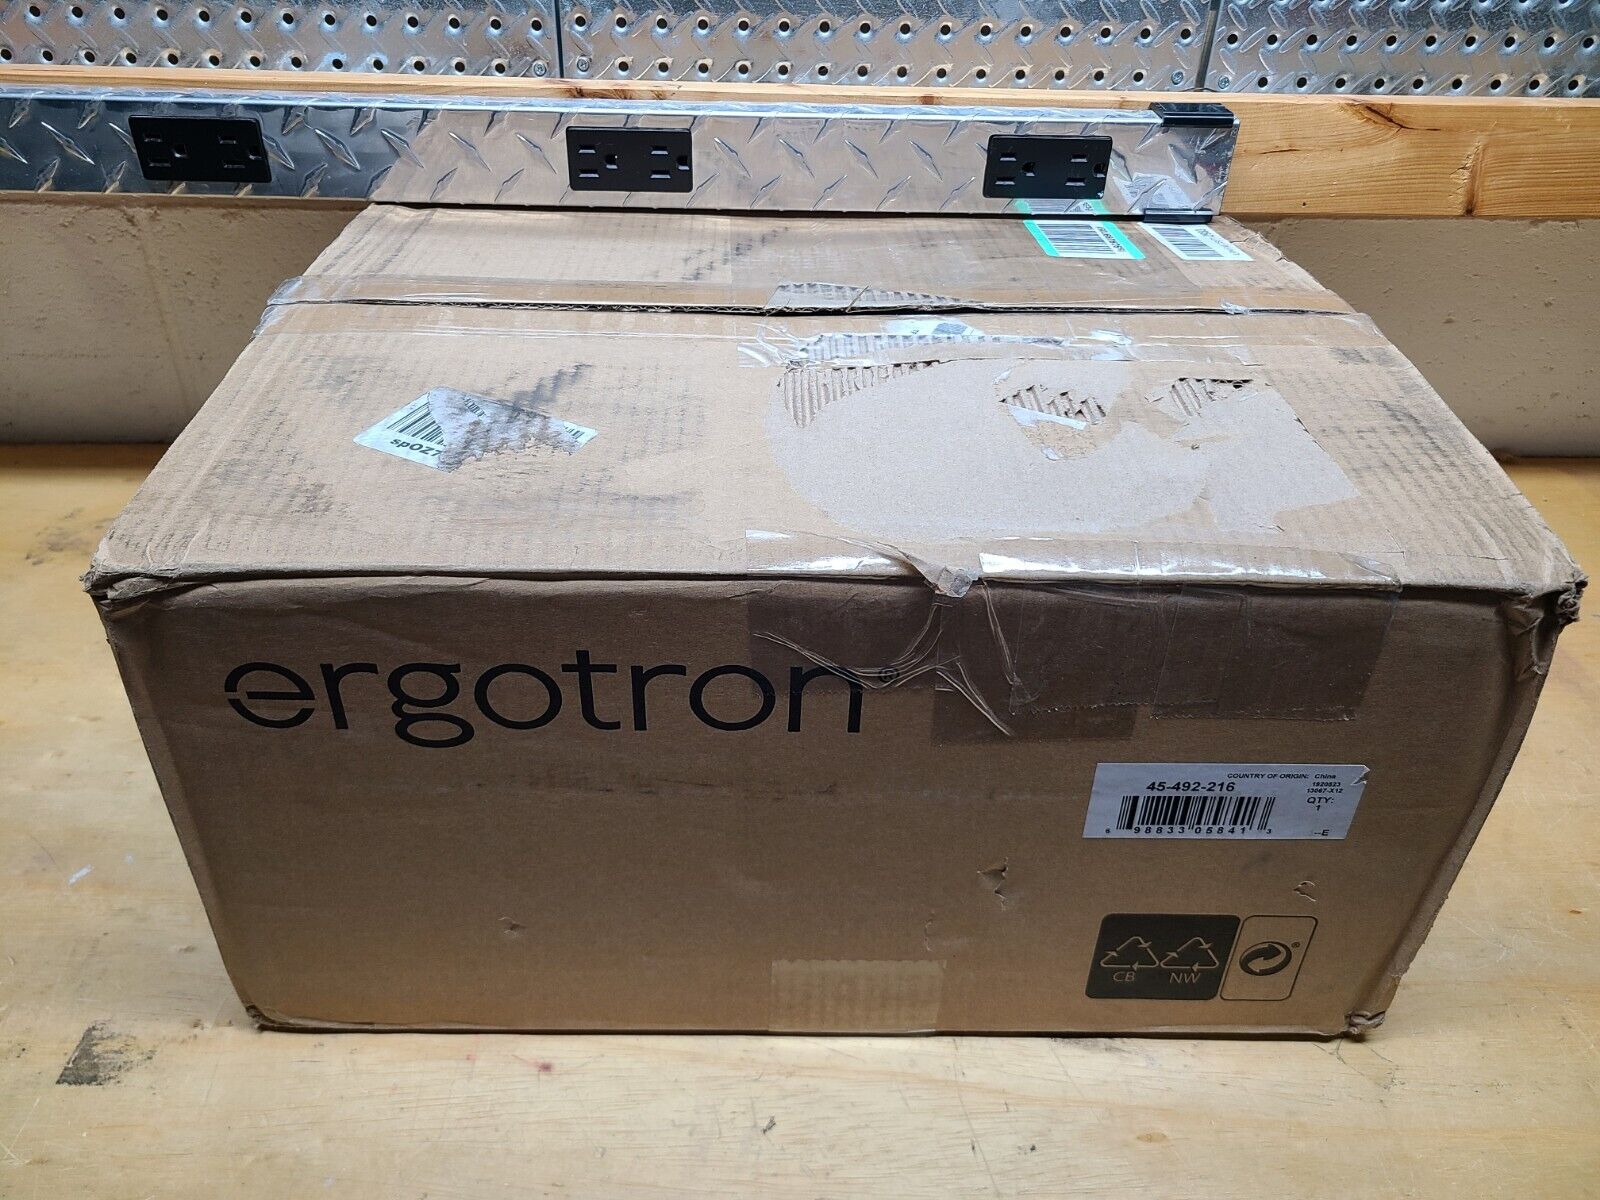 Ergotron 45-492-216 LX Stacking Dual Monitor Arm 13